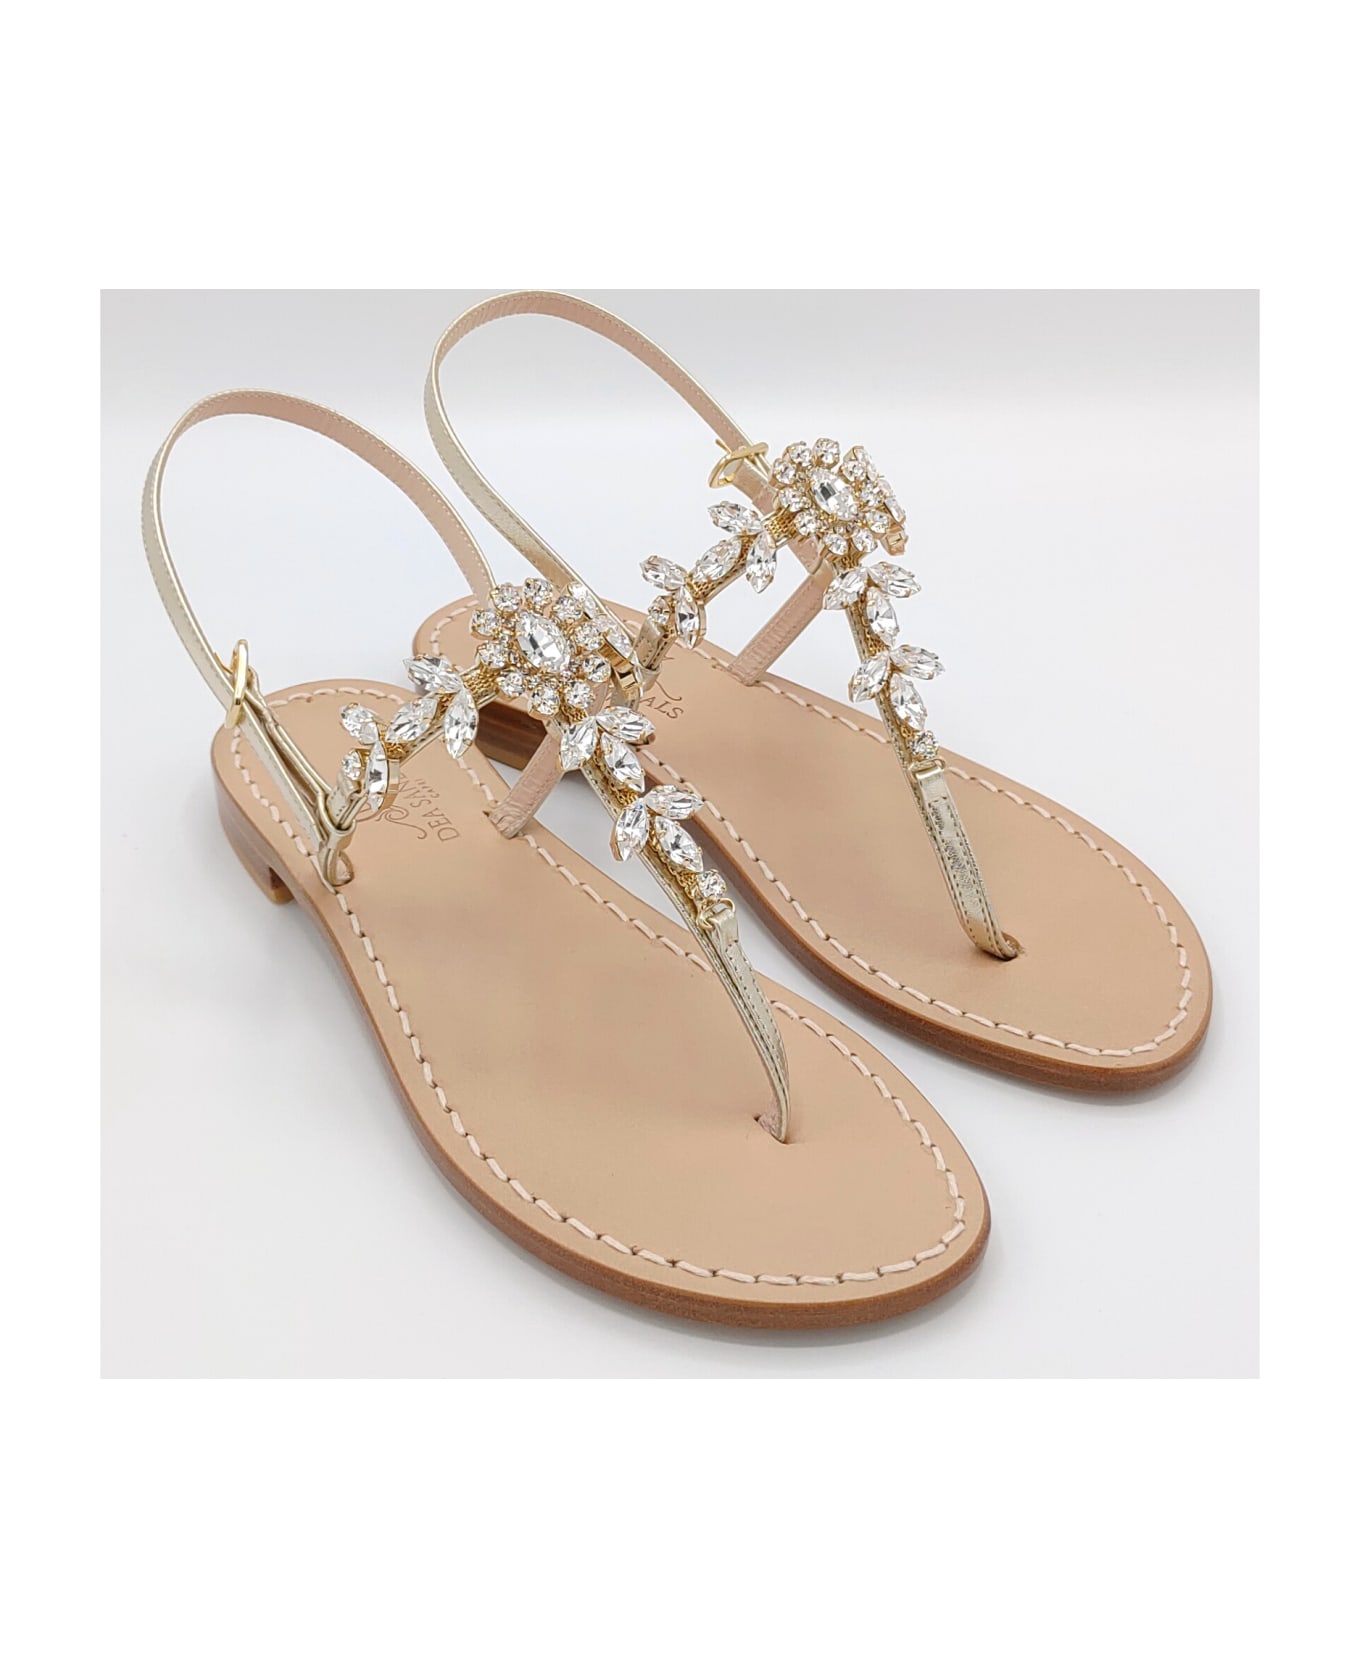 Dea Sandals Marina Grande Flip Flops Thong Sandals - gold, crystal